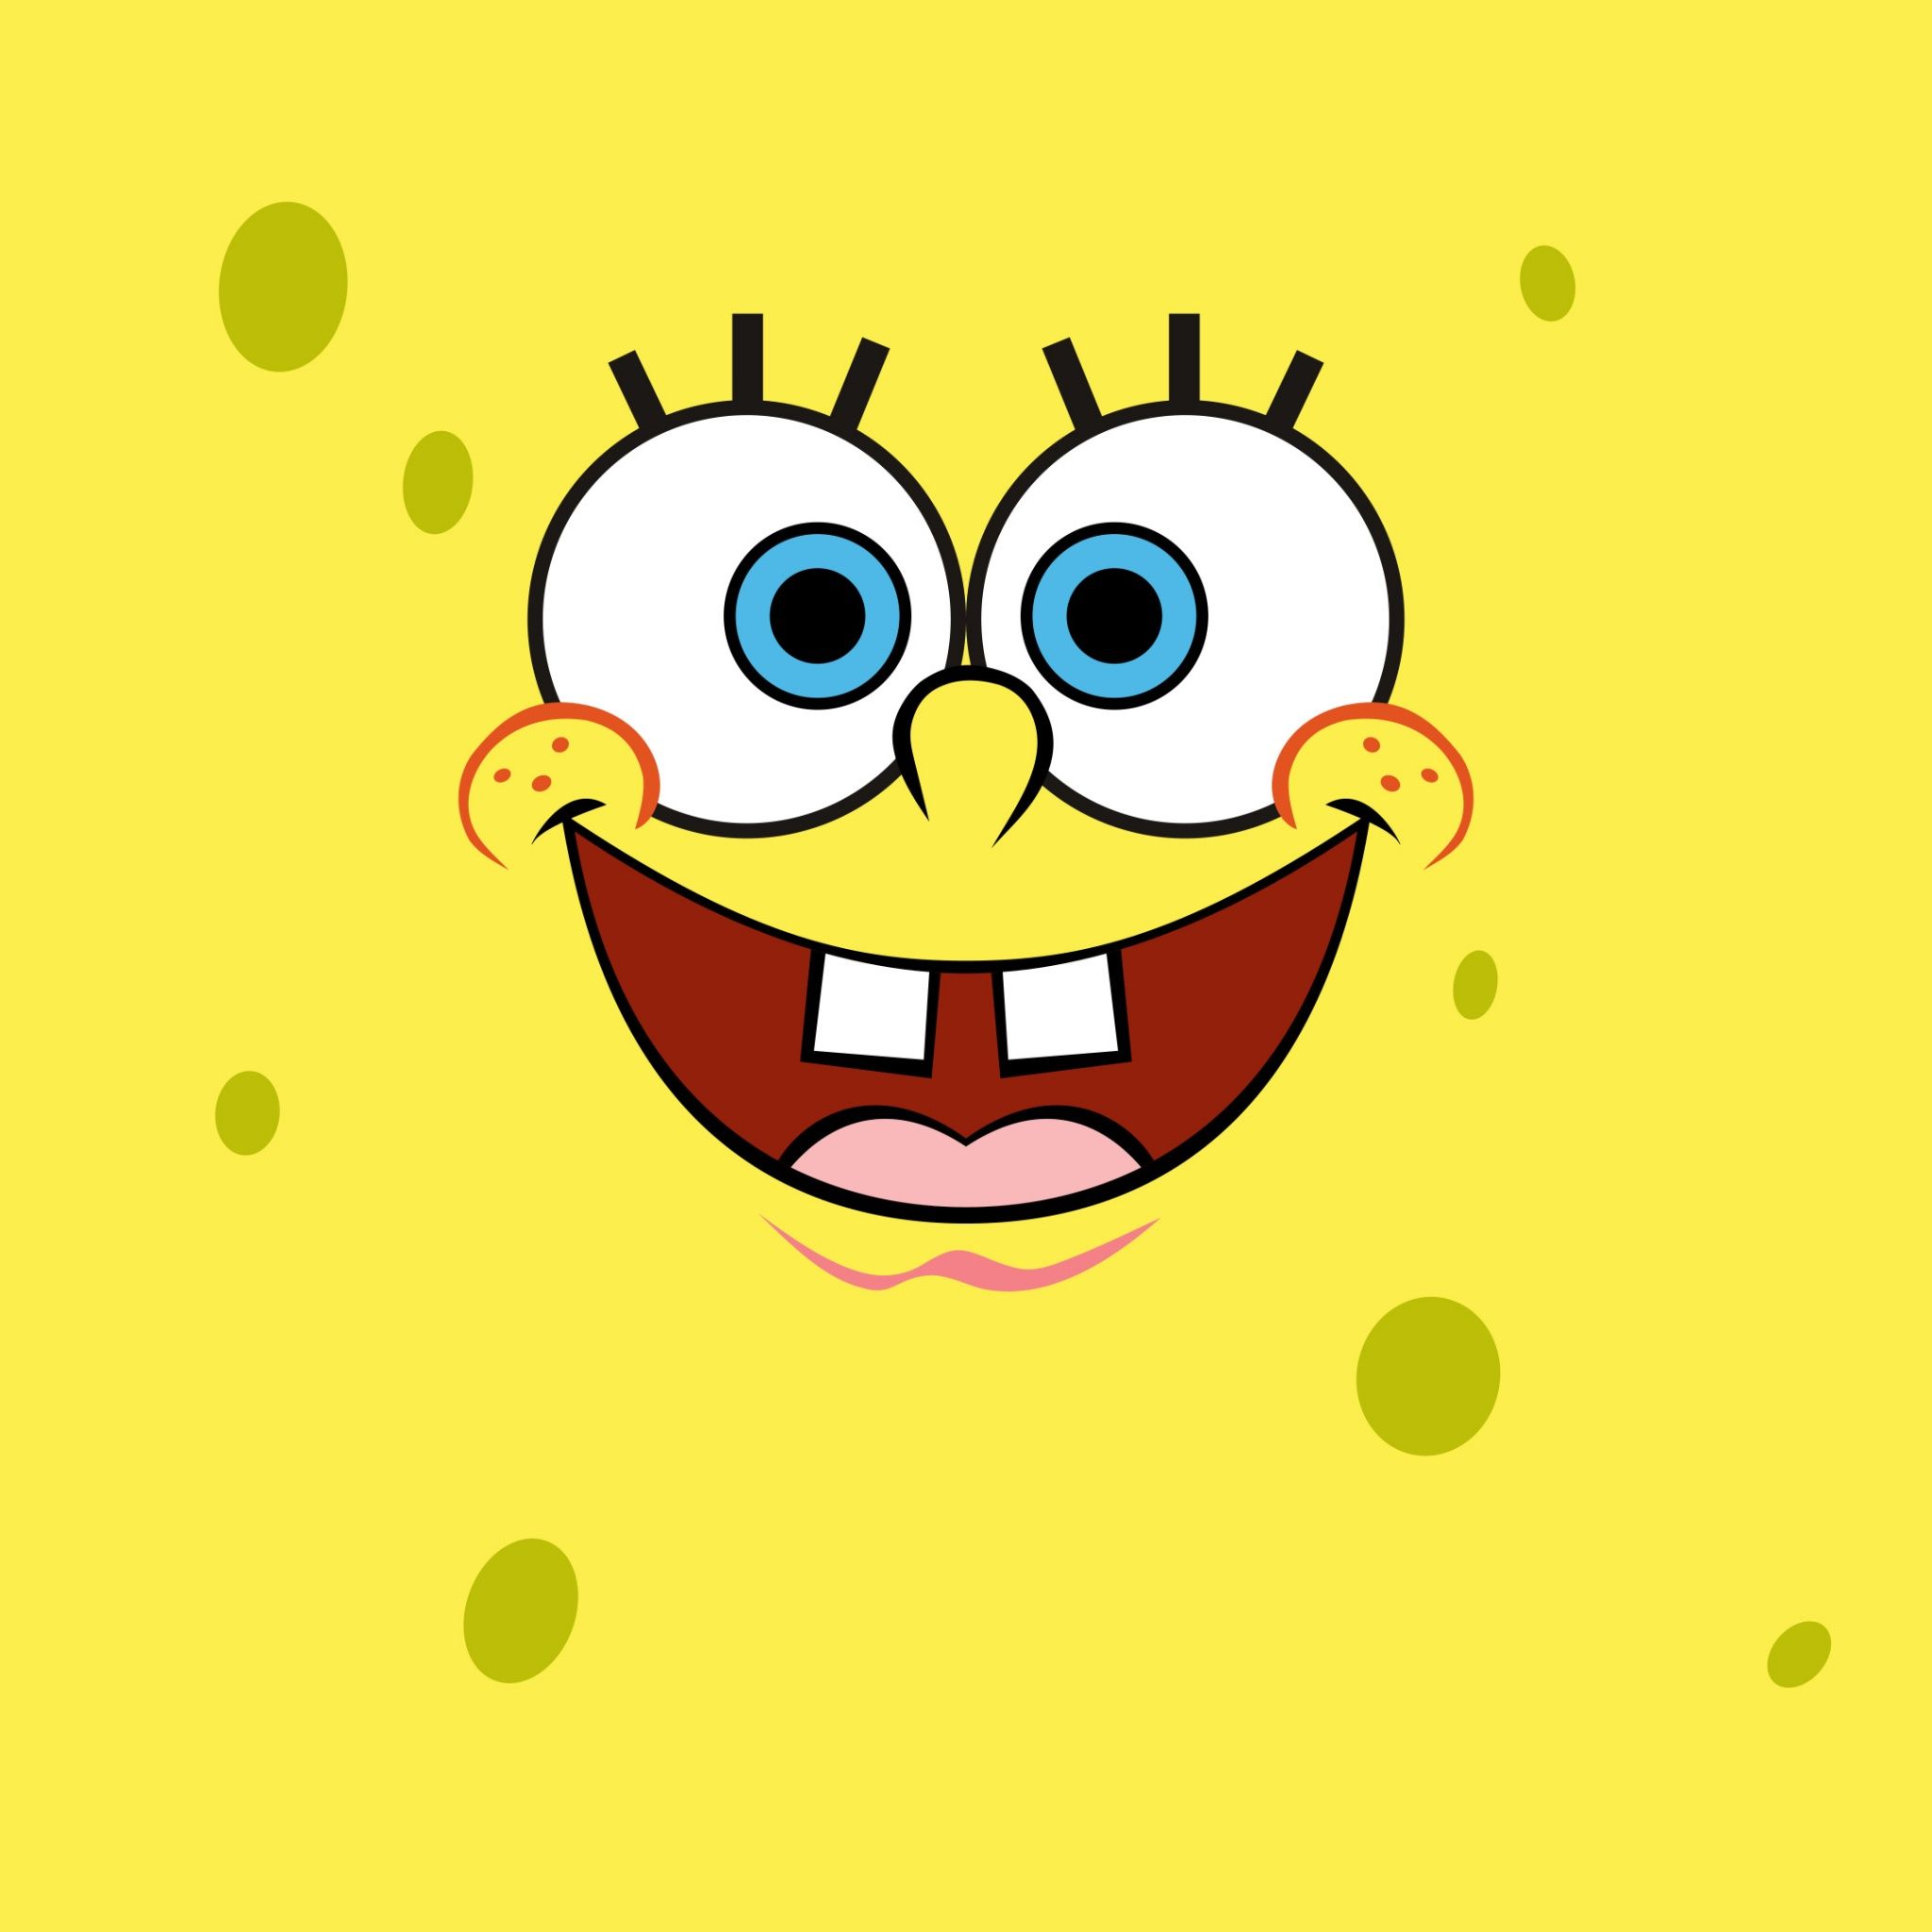 SpongeBob smiley face Wallpaper 4K, Yellow background